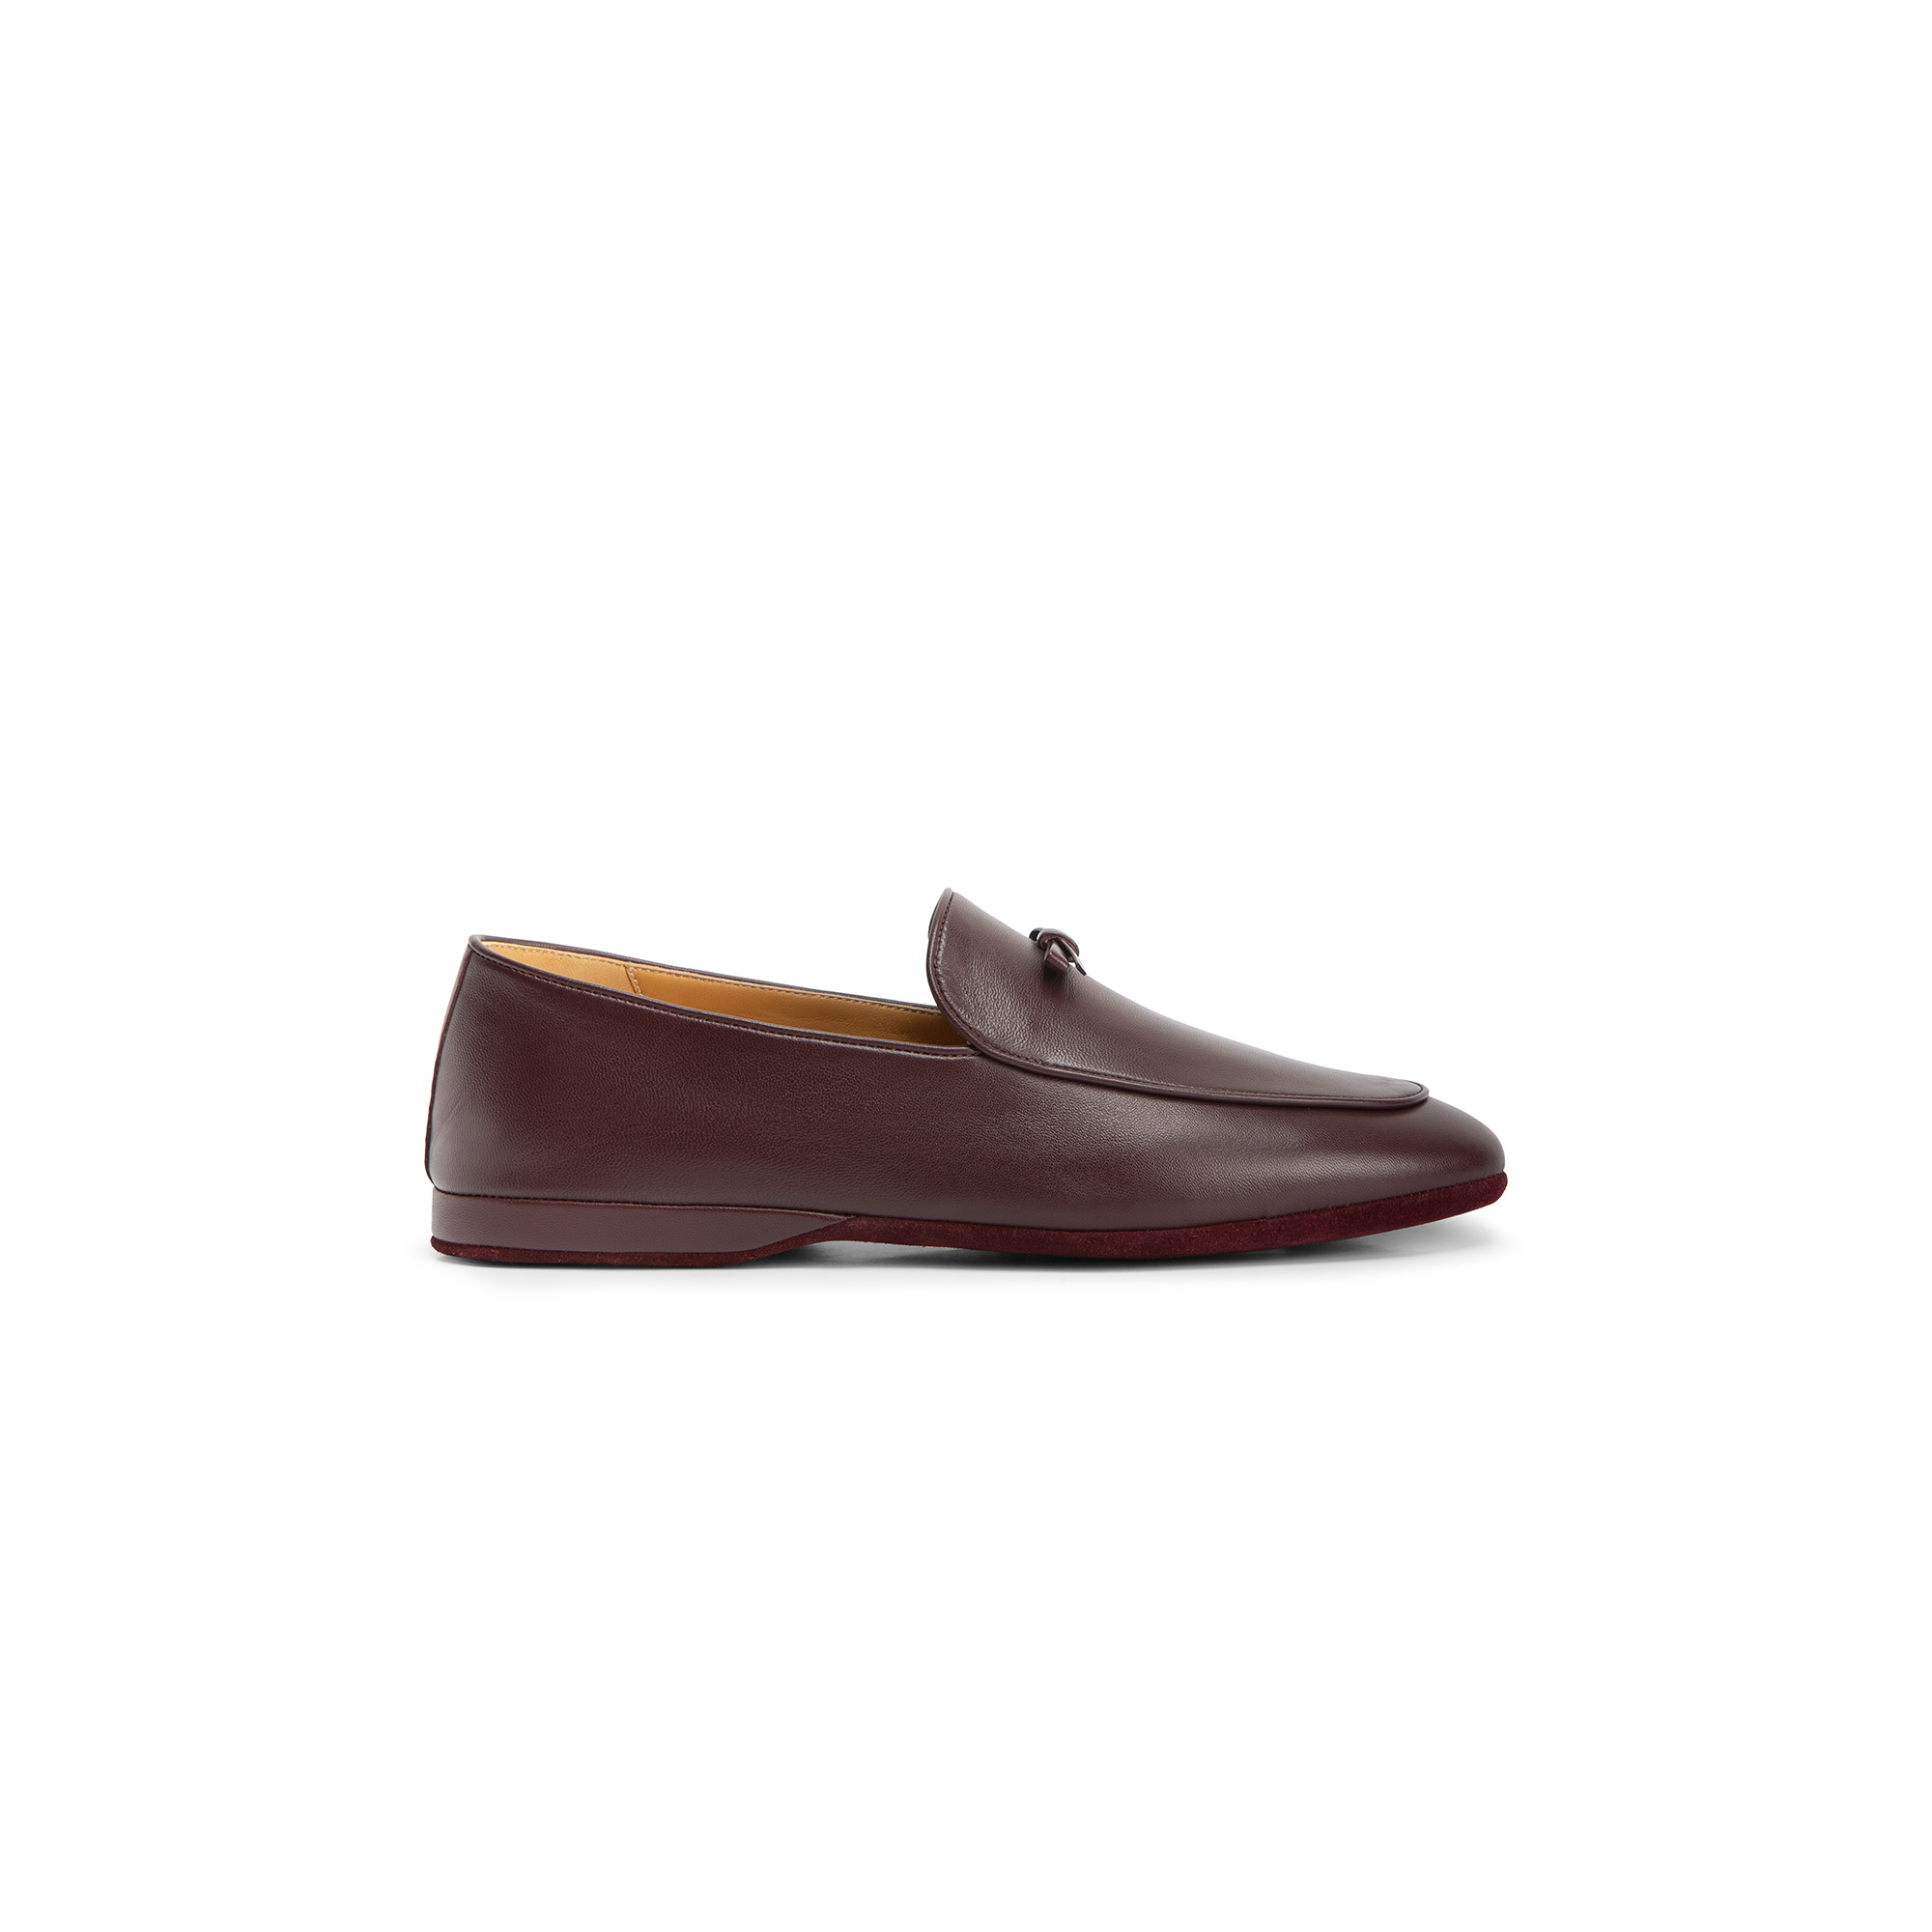 Pantofola chiusa interno nappa burgundy - Farfalla italian slippers